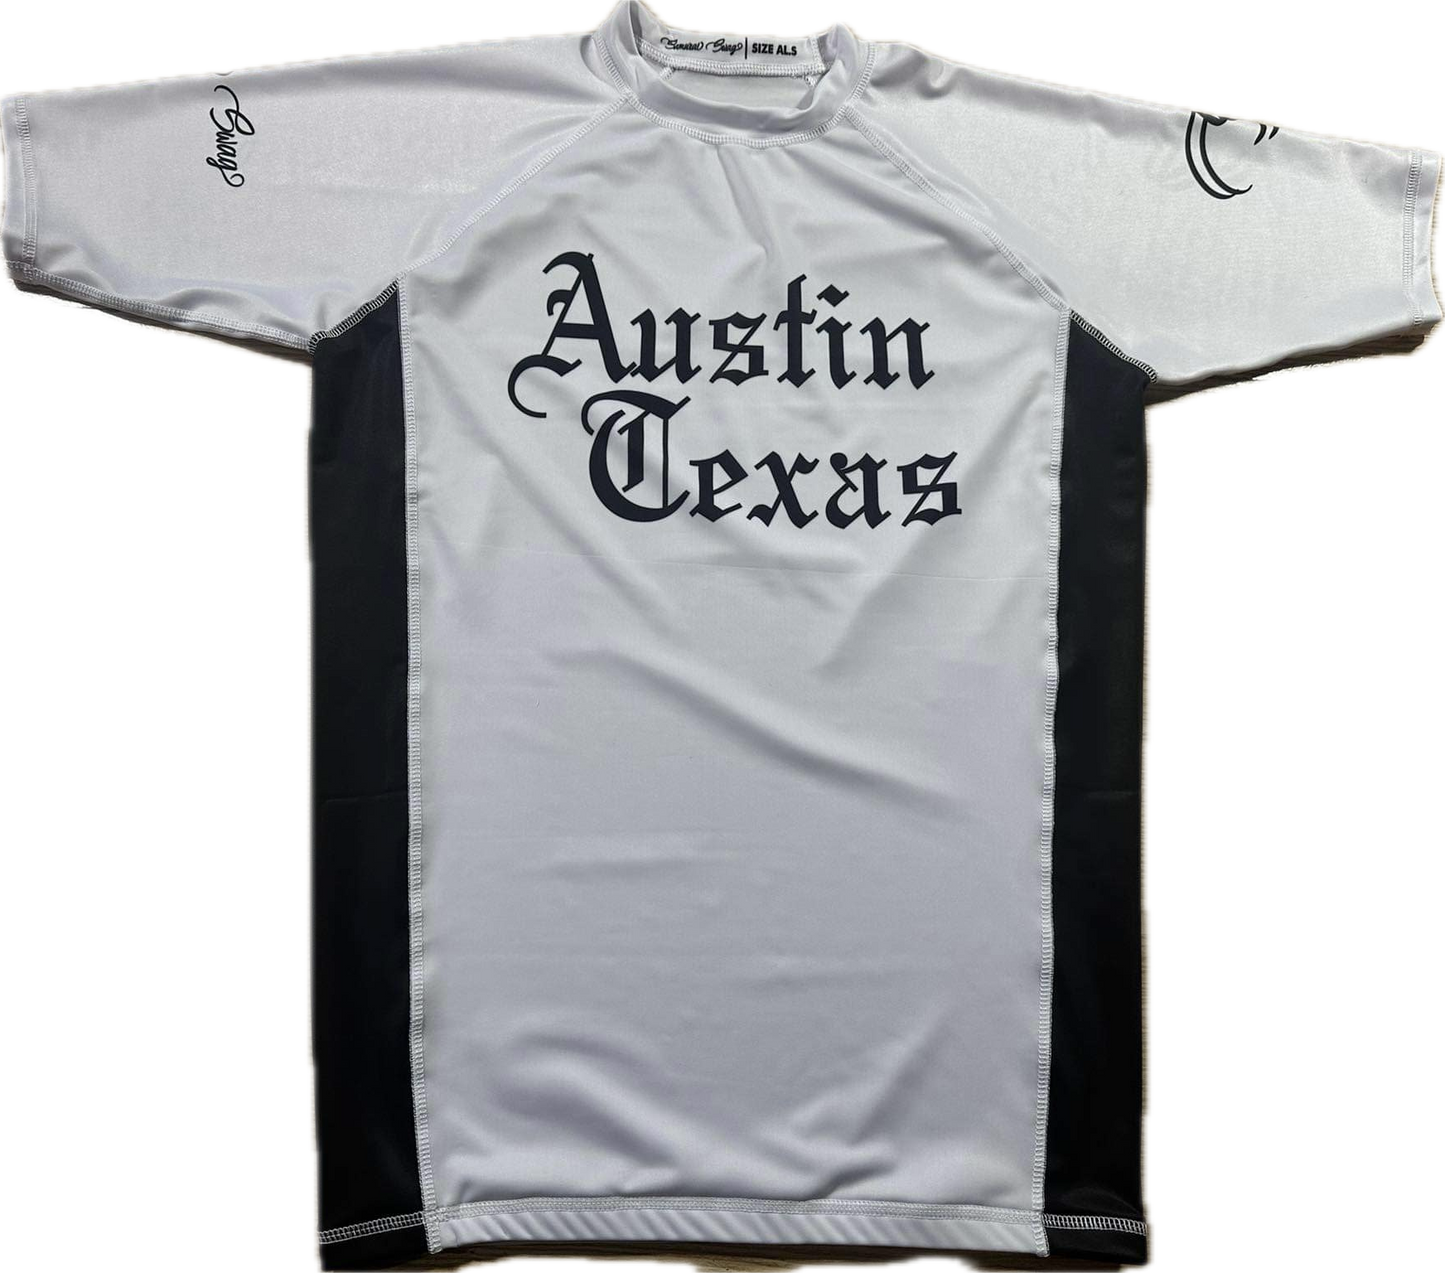 Austin Texas Classic Rashguard